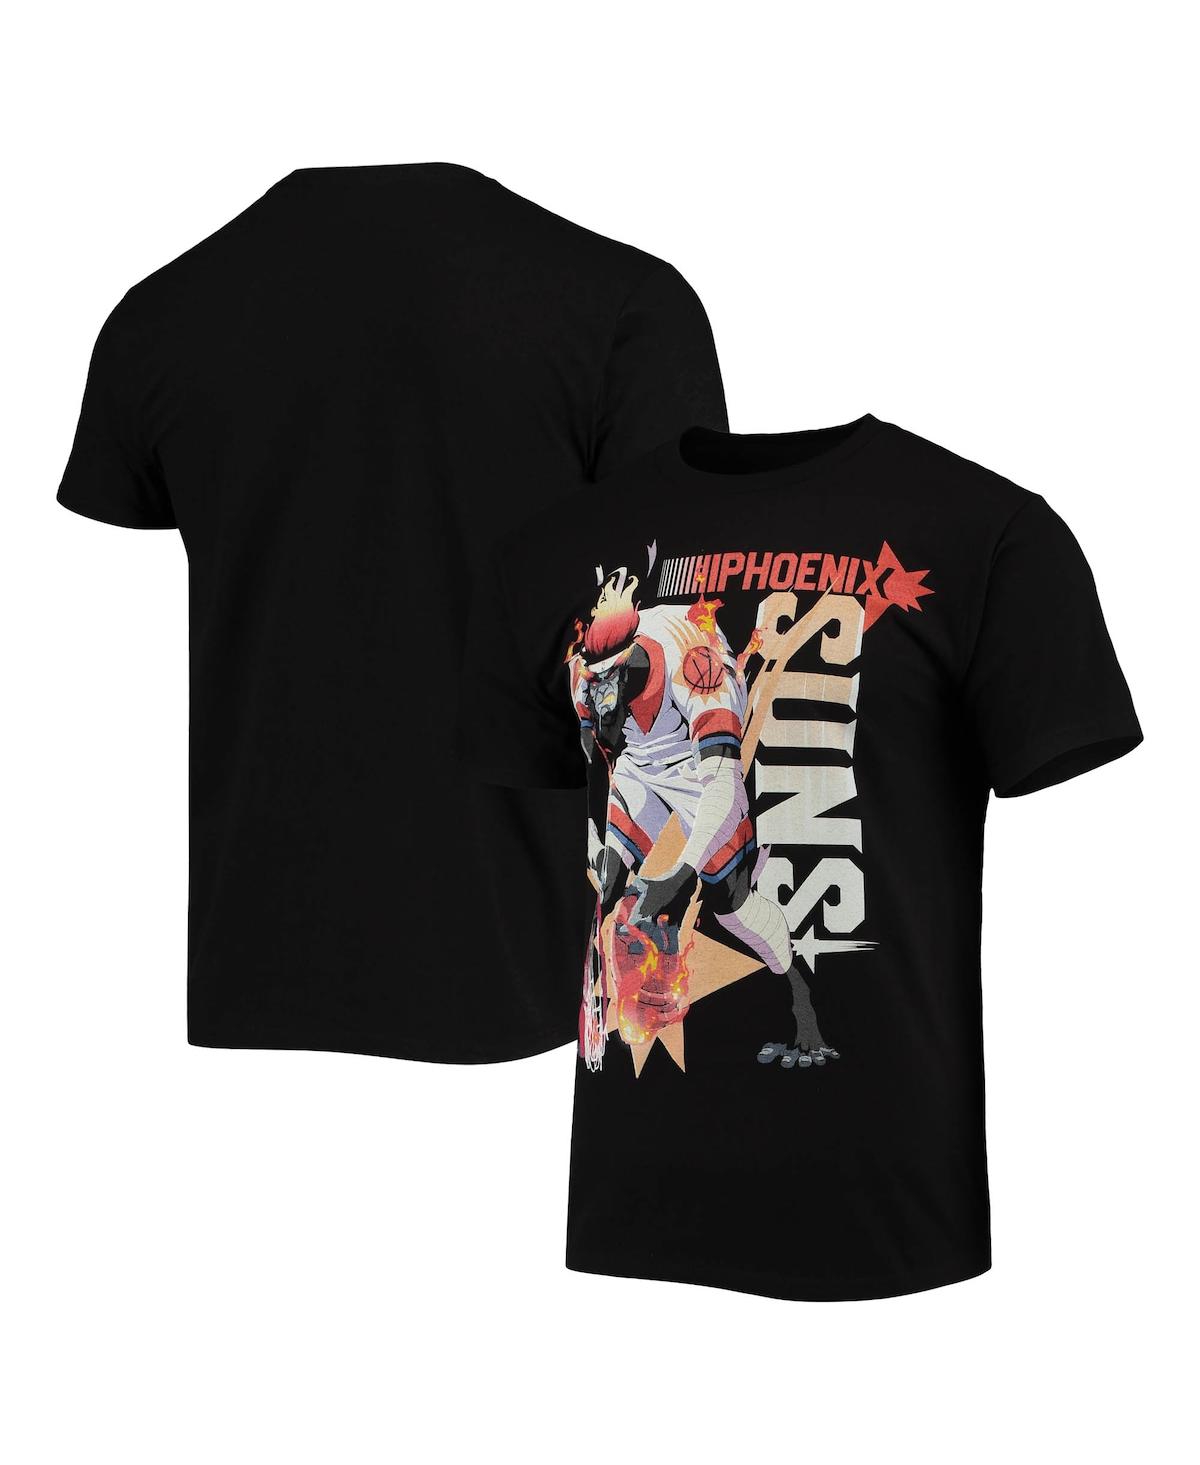 Men's Nba x McFlyy Black Phoenix Suns Identify Artist Series T-shirt - Black